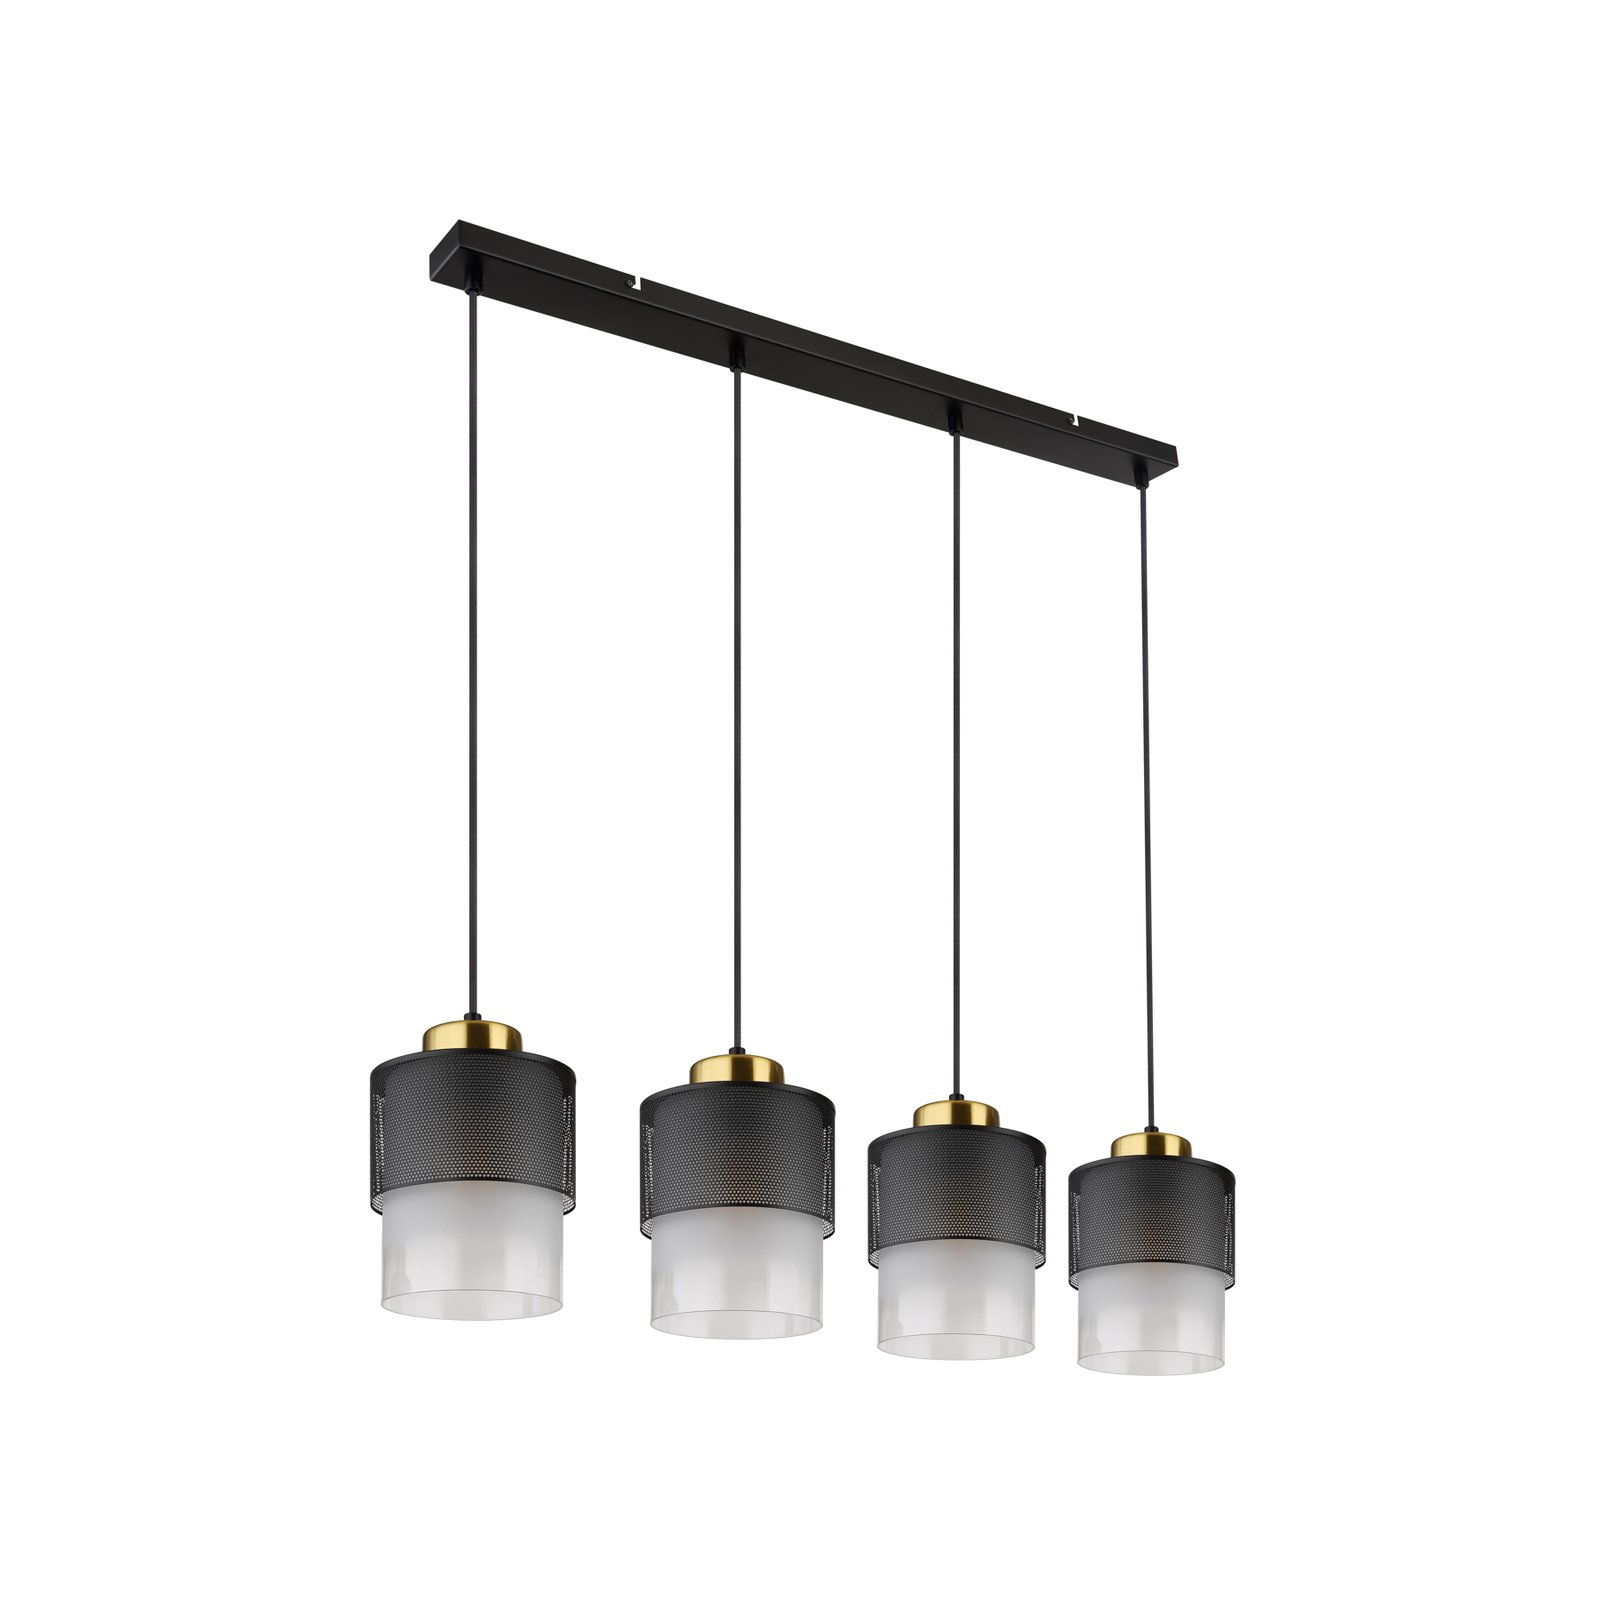 Olga hanglamp, lengte 91 cm, zwart, 4-lamps, metaal/glas